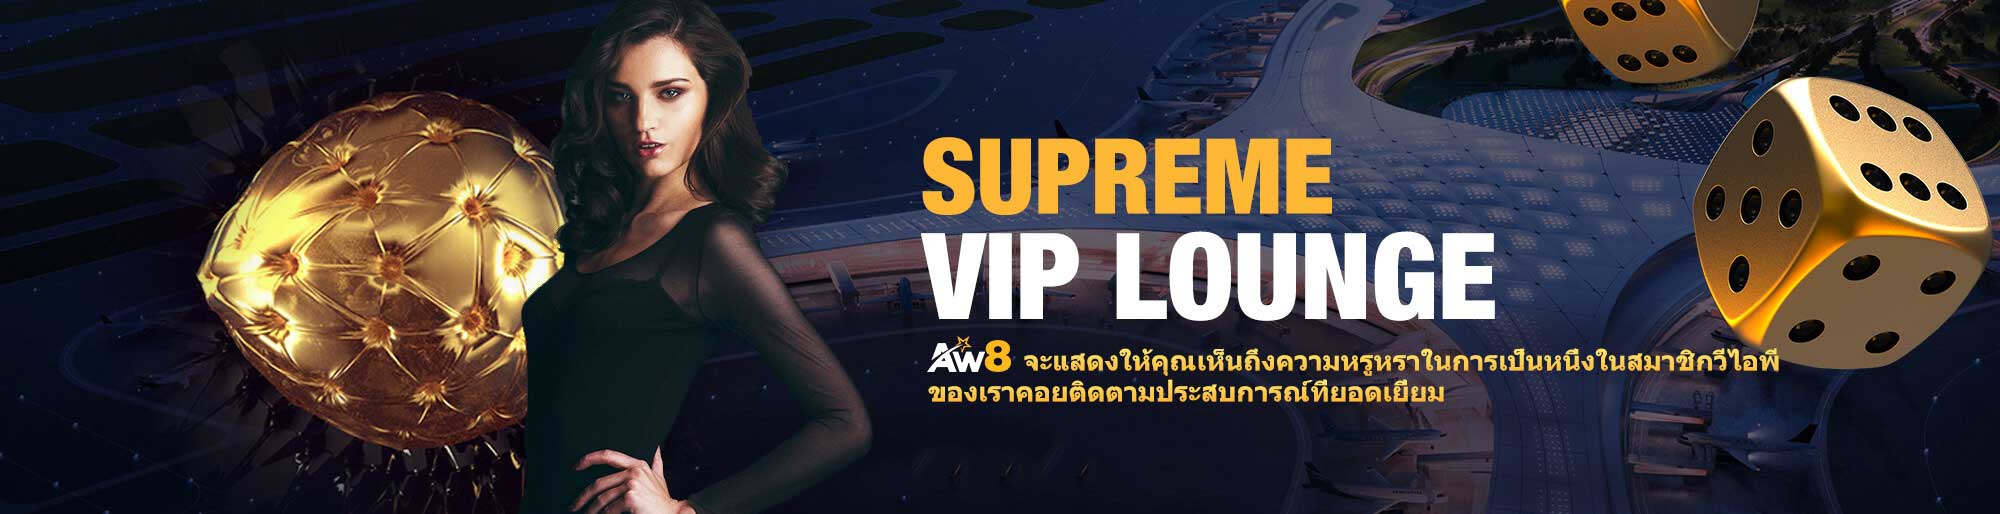 AW8 vip casino banner thai 1